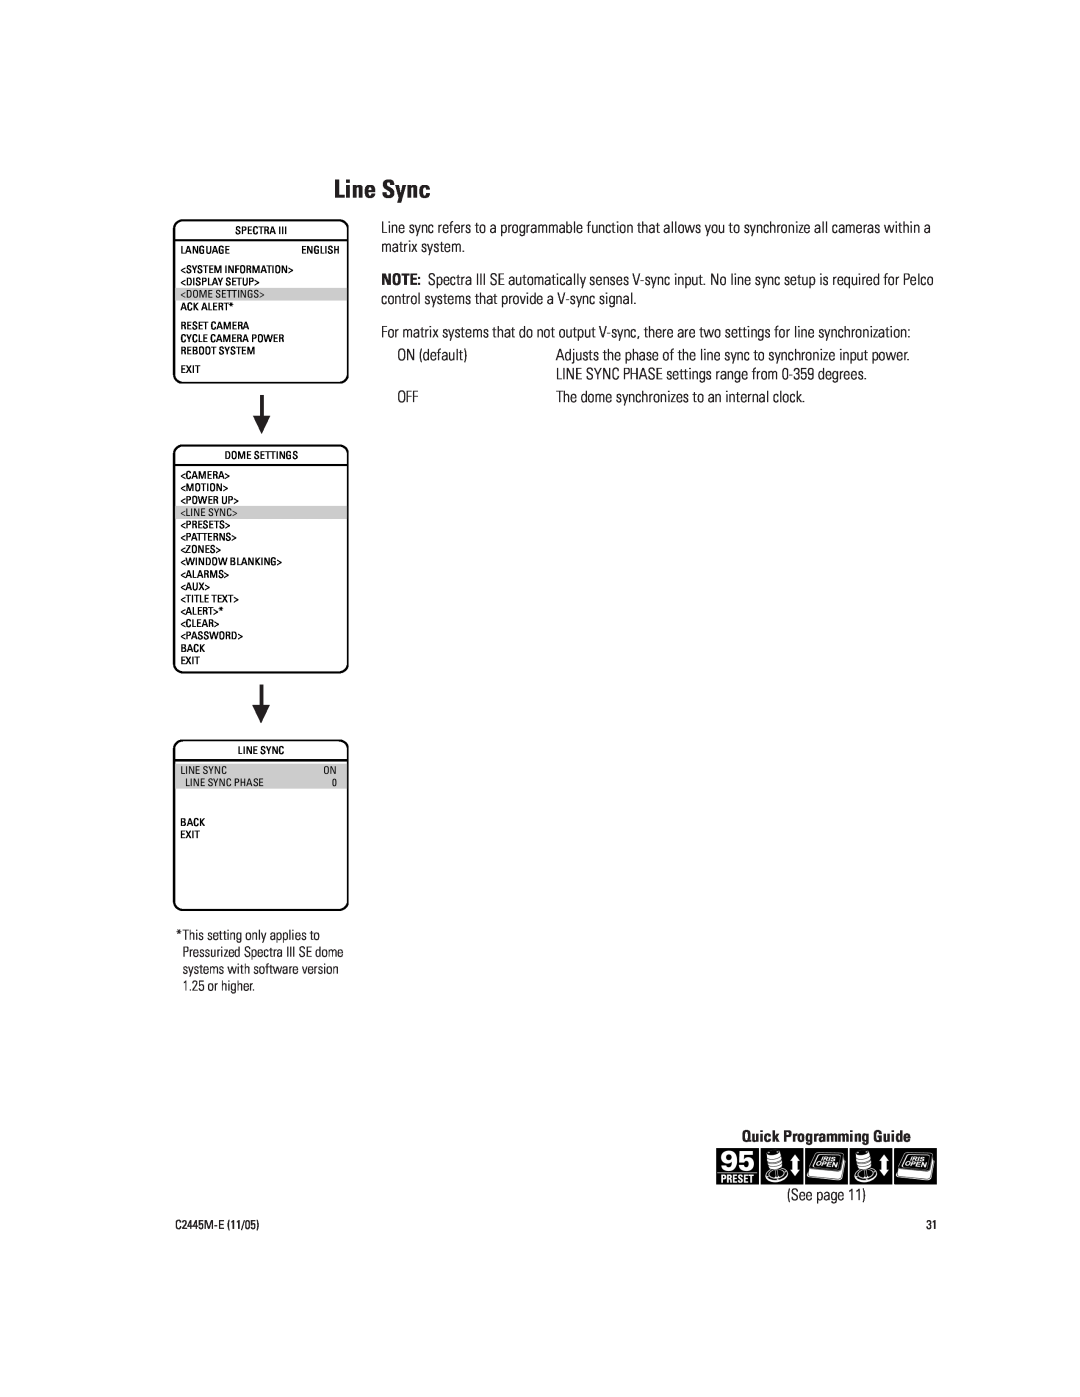 Pelco DD53CBW-X manual Line Sync, Quick Programming Guide 